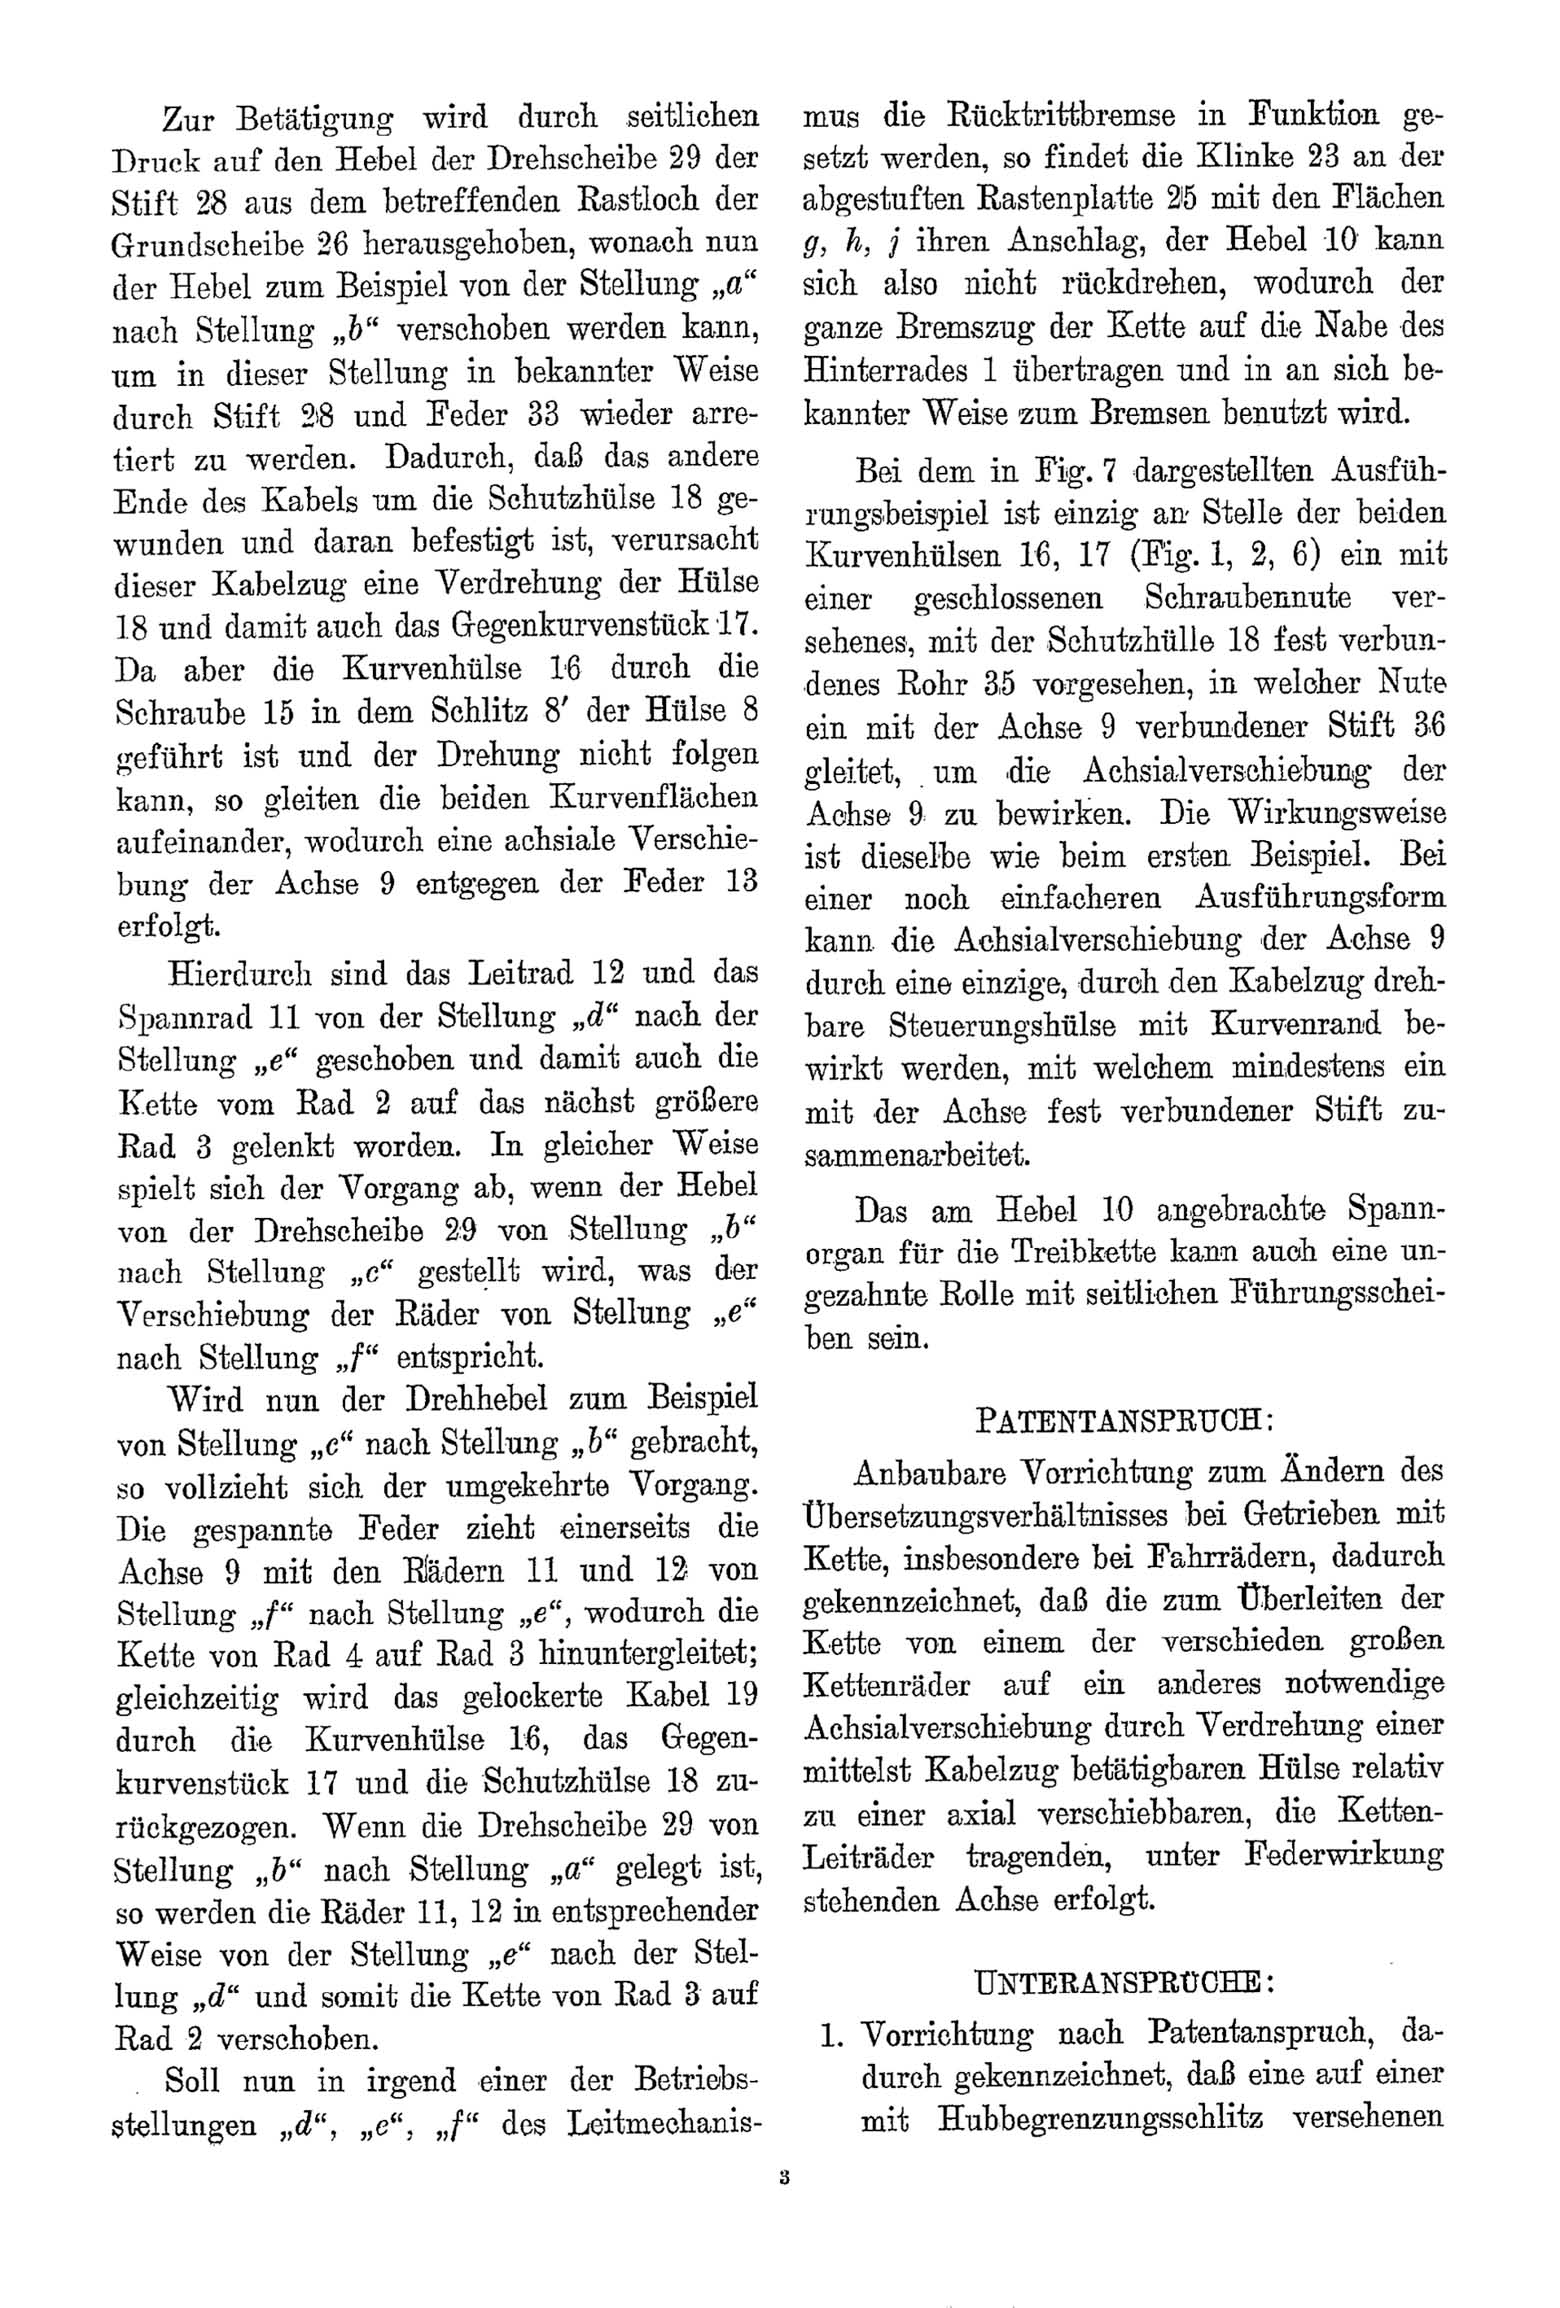 Swiss Patent 161,464 - Mercier scan 3 main image